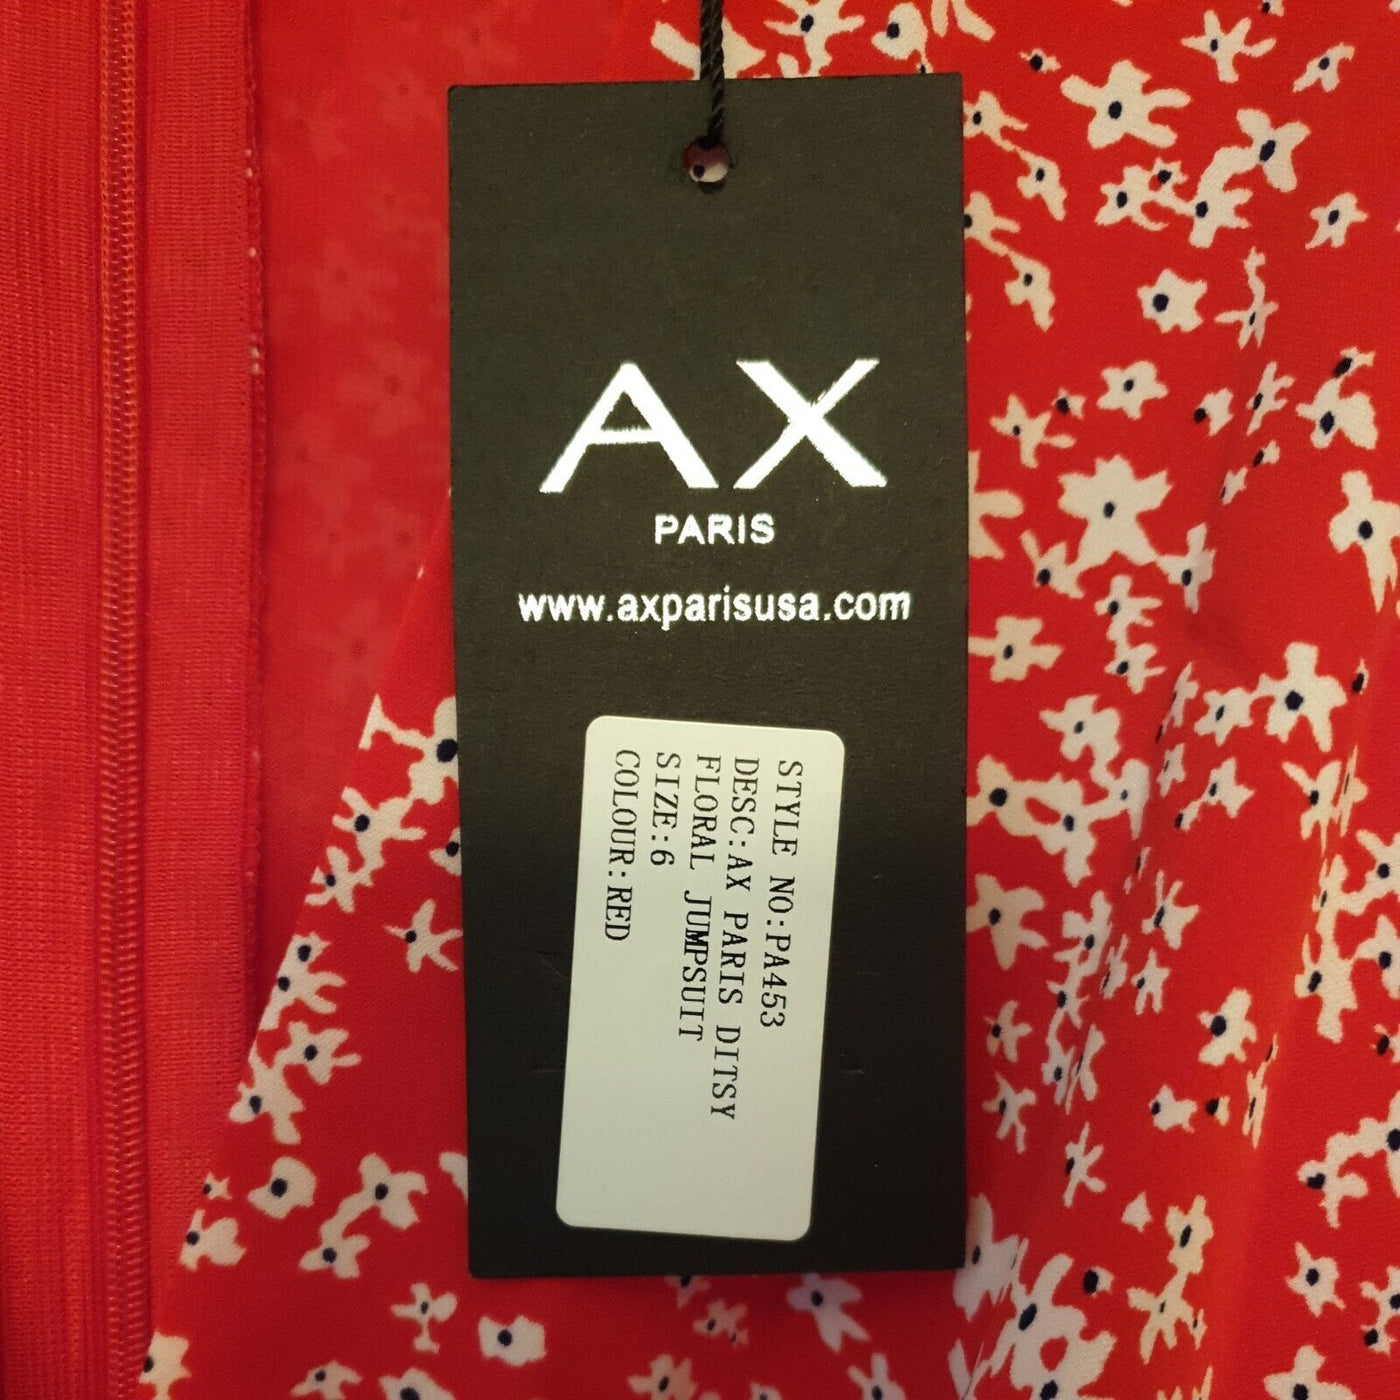 AX Paris Ditsy Floral Jumpsuit Red Size 6****Ref V68